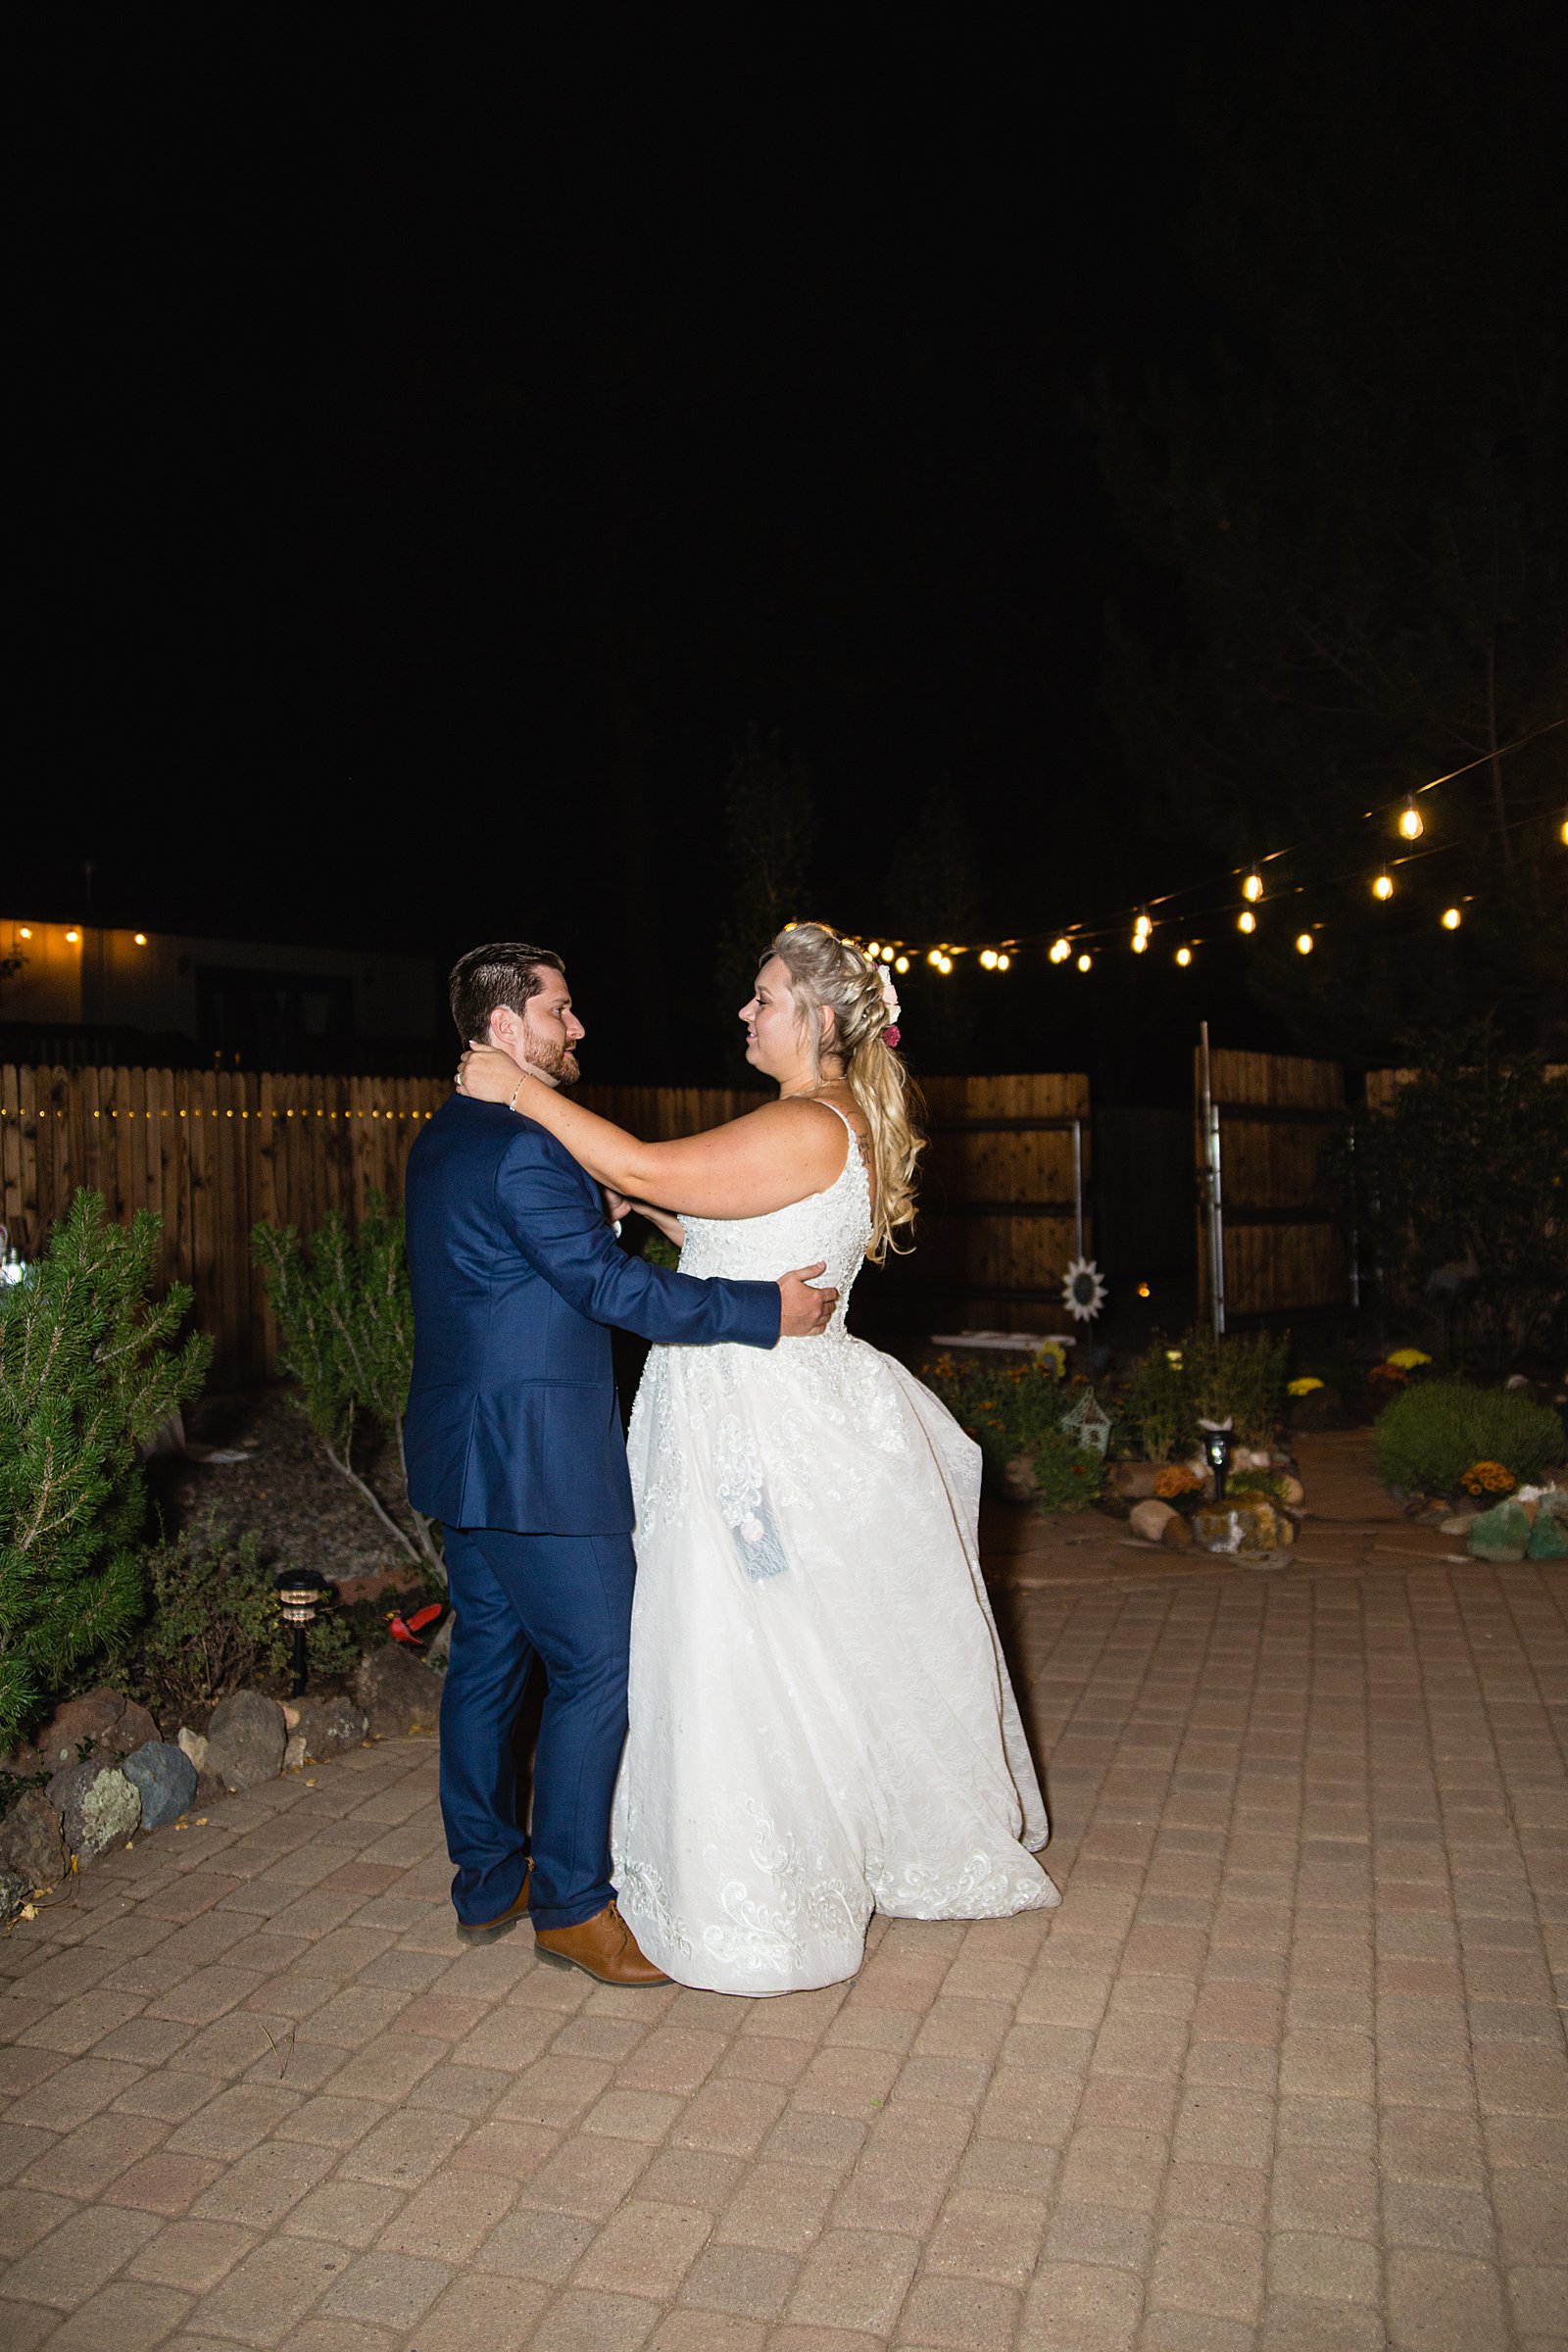 Bride and Groom sharing first dance at their backyard wedding reception by Arizona wedding photographer PMA Photography.